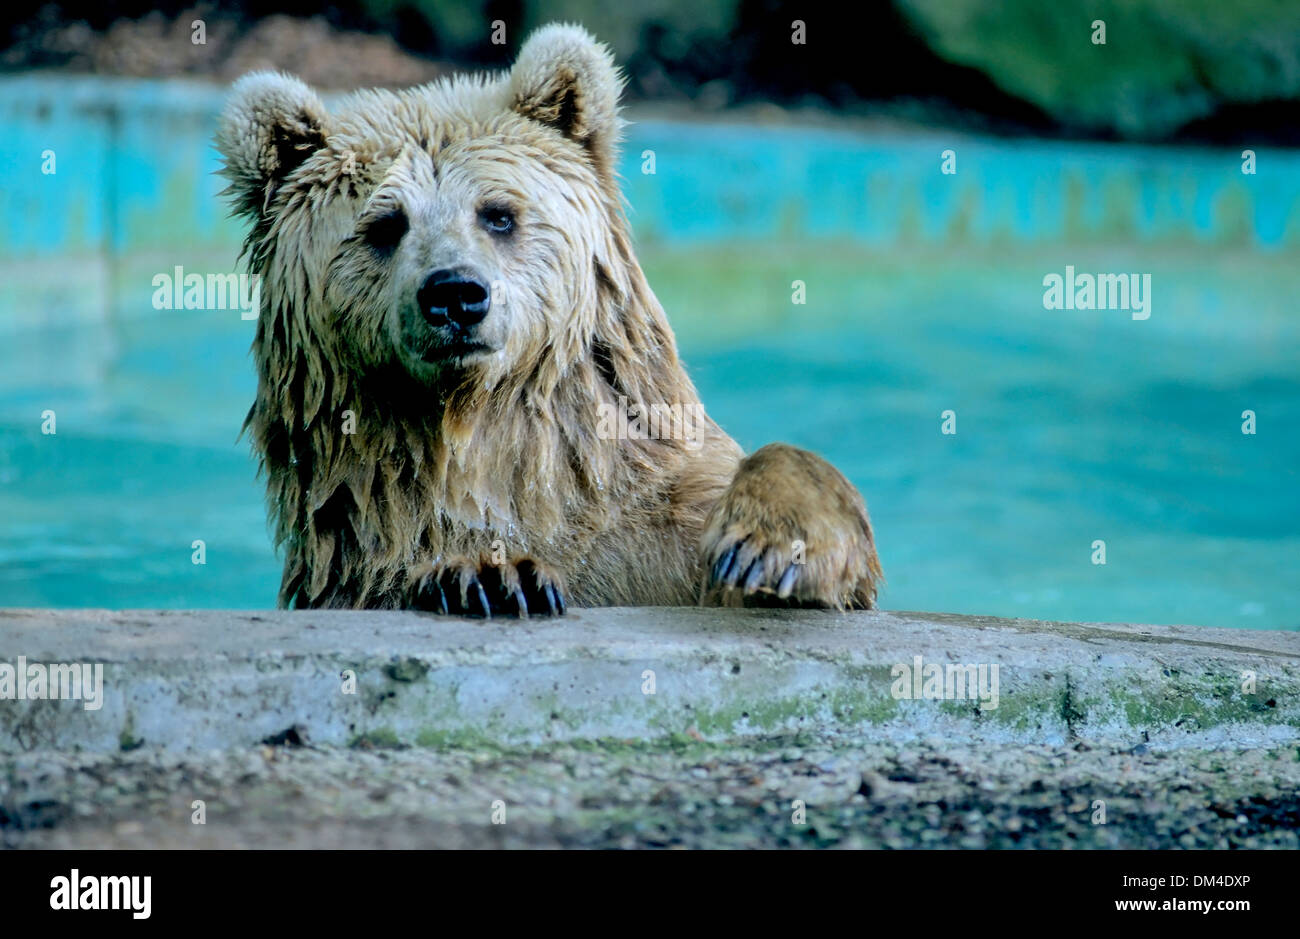 brown bear (Ursus arctos), Zoo: Braunbär im Pool, Stock Photo